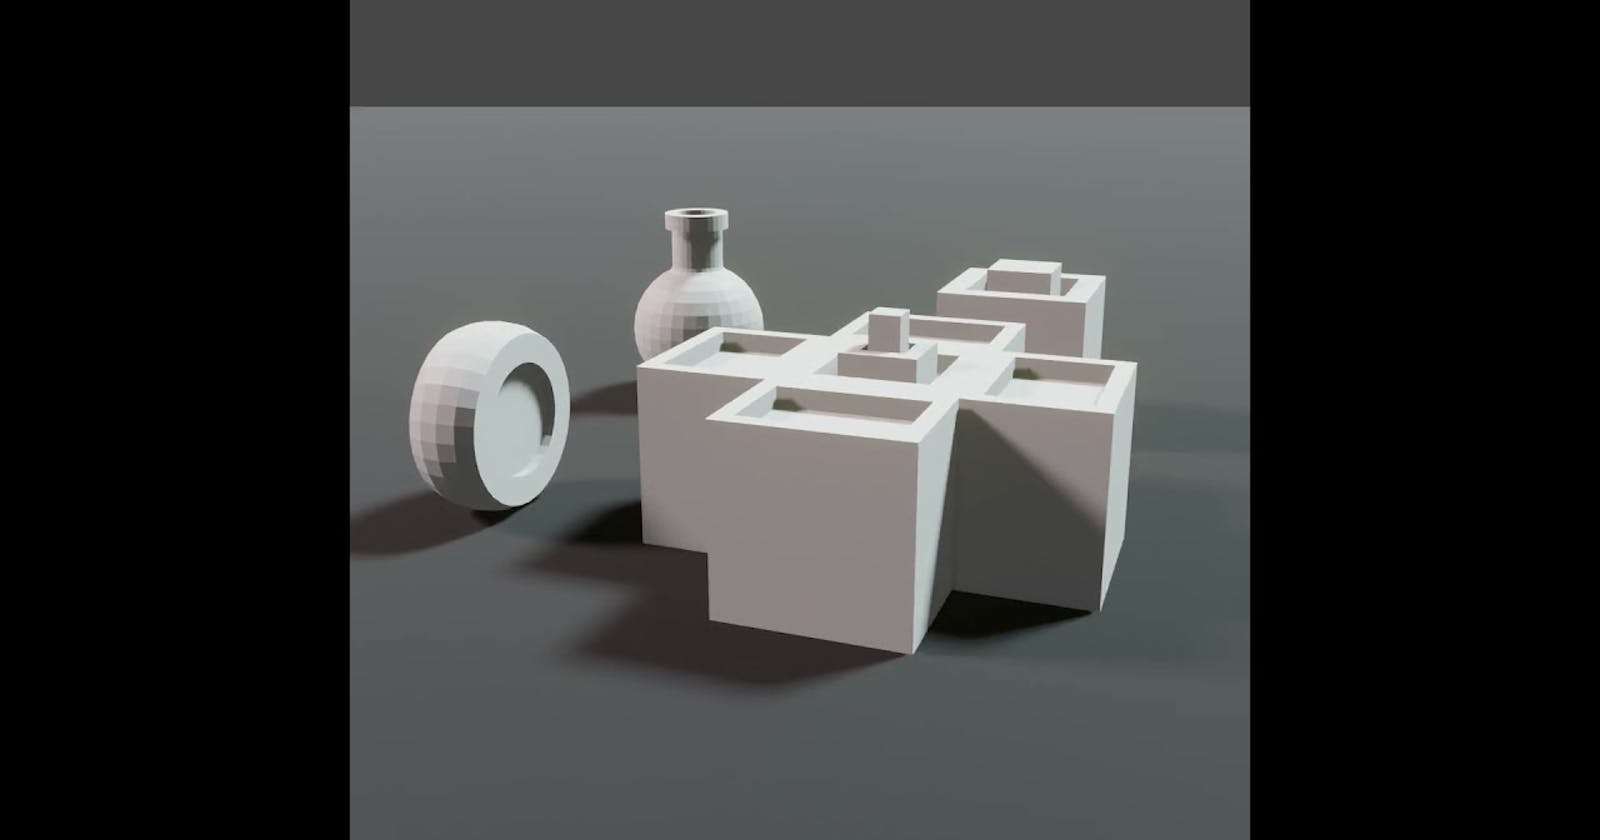 Blender 3D Progress #14 - Four Objects On A Plane